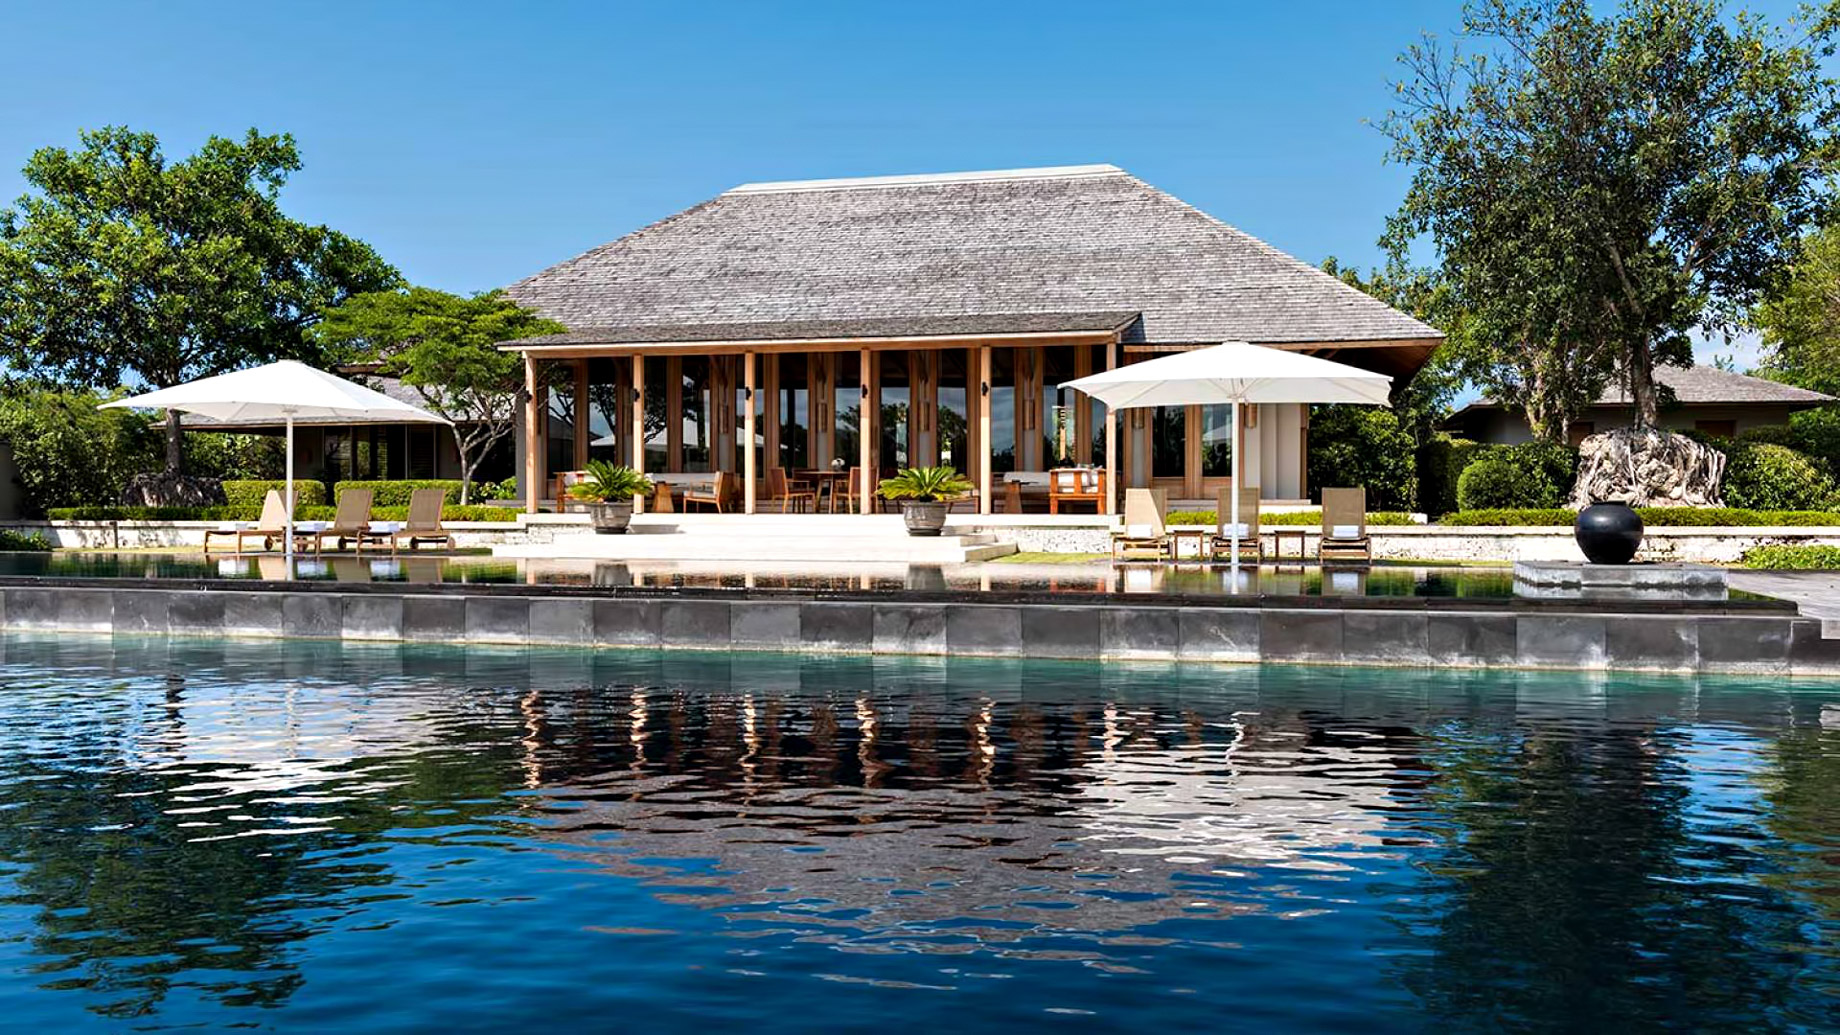 Amanyara Resort - Providenciales, Turks and Caicos Islands - 6 Bedroom Amanyara Villa Poolside Lounge